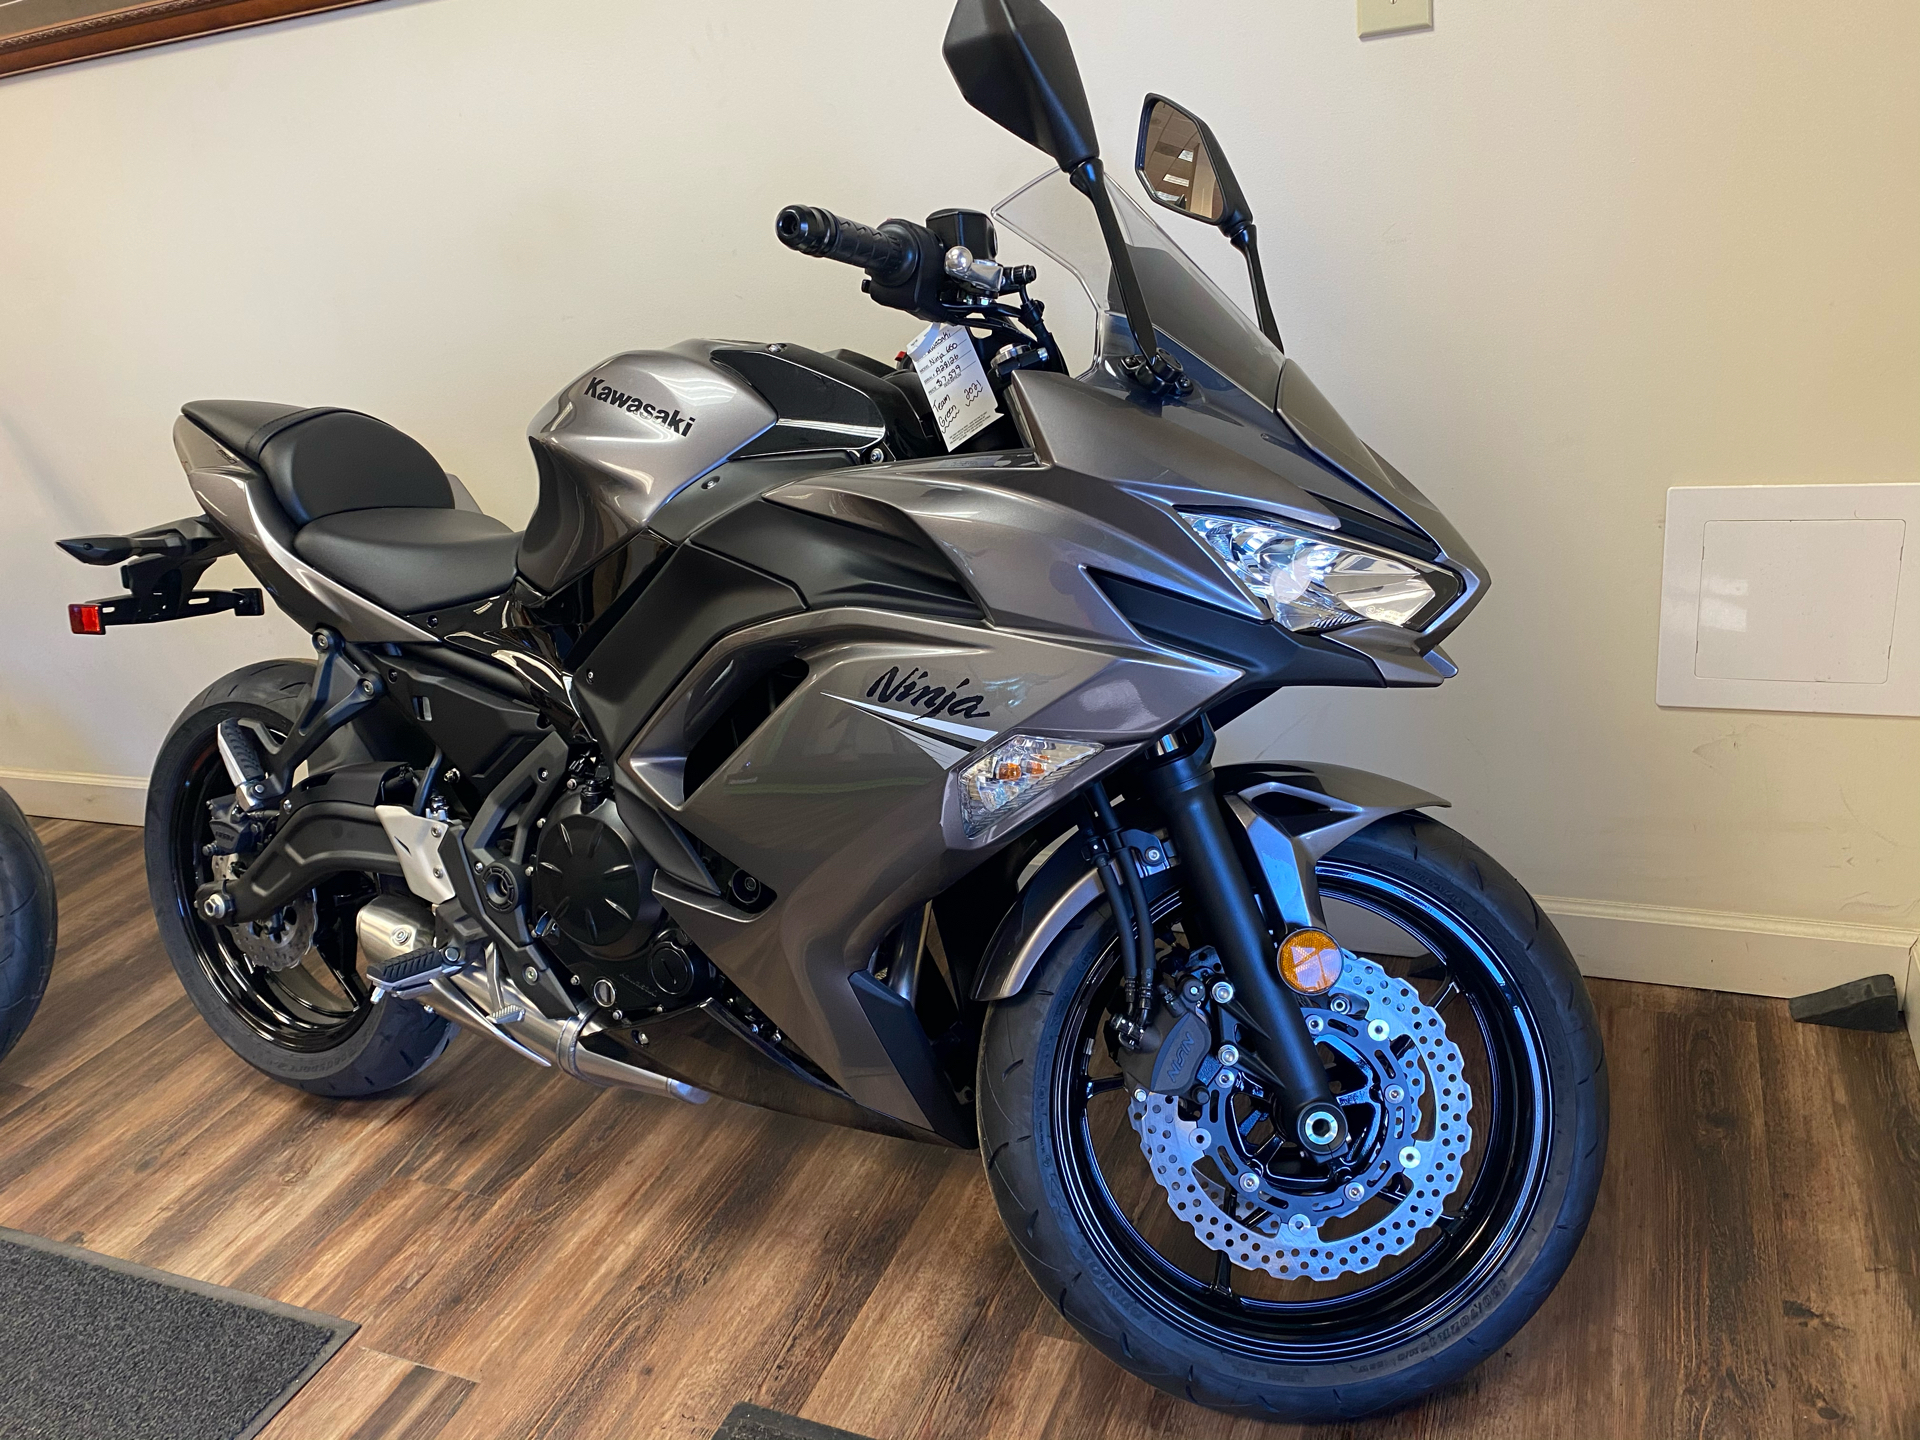 New 2021 Kawasaki Ninja 650 Motorcycles in Statesville, NC | Stock Number: -